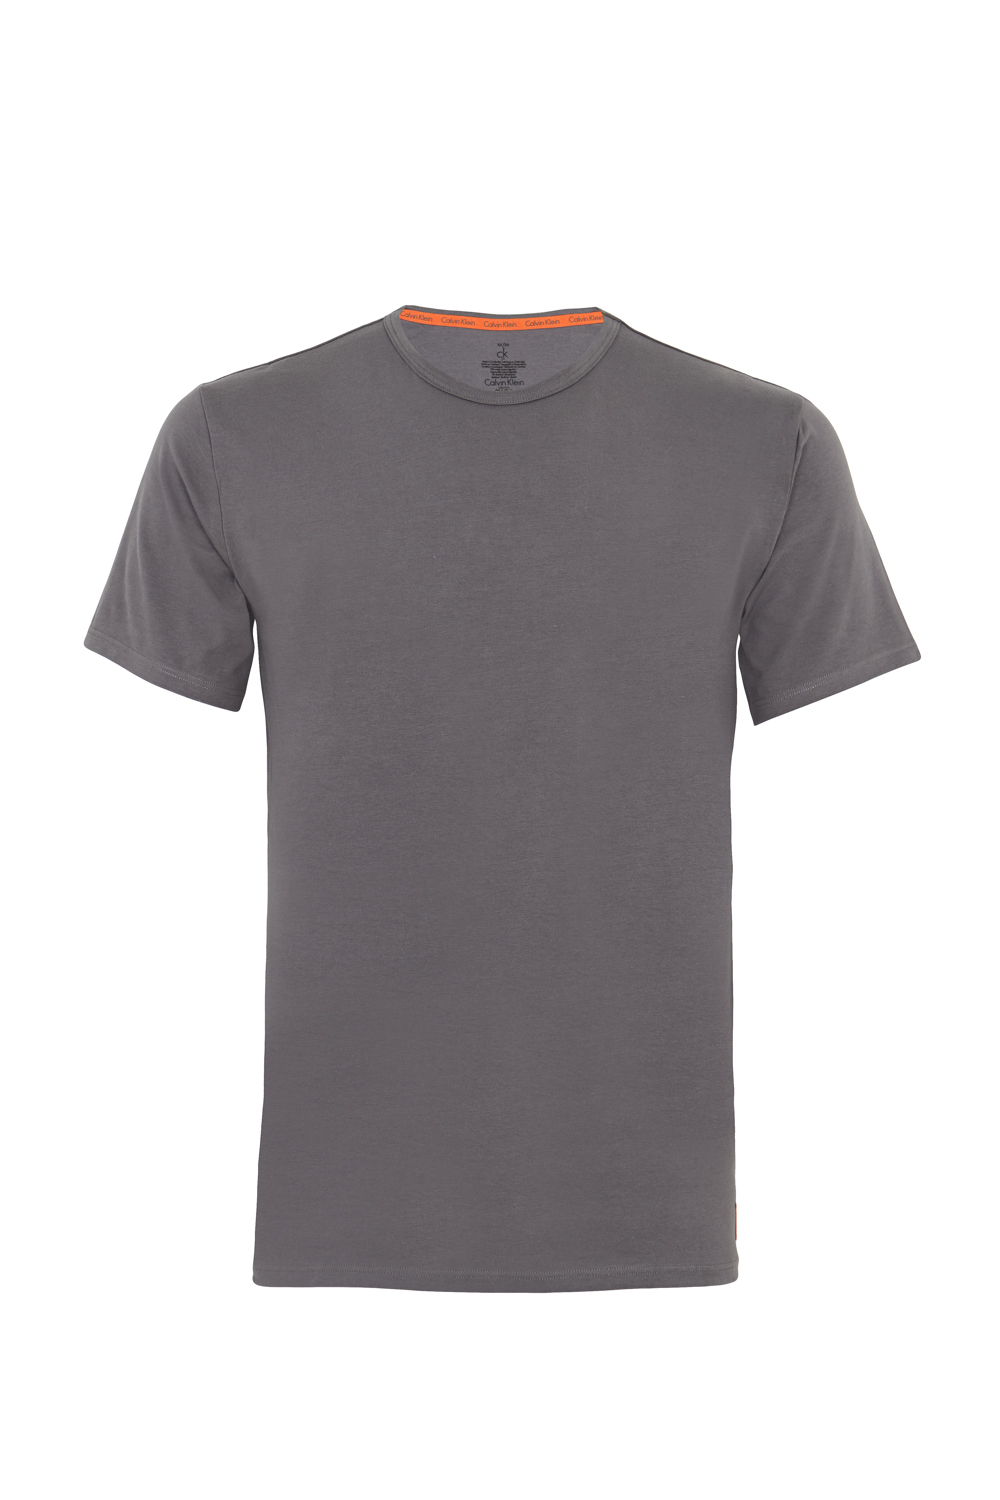 Calvin Klein Cotton Crew Neck T-Shirt Slate Grey